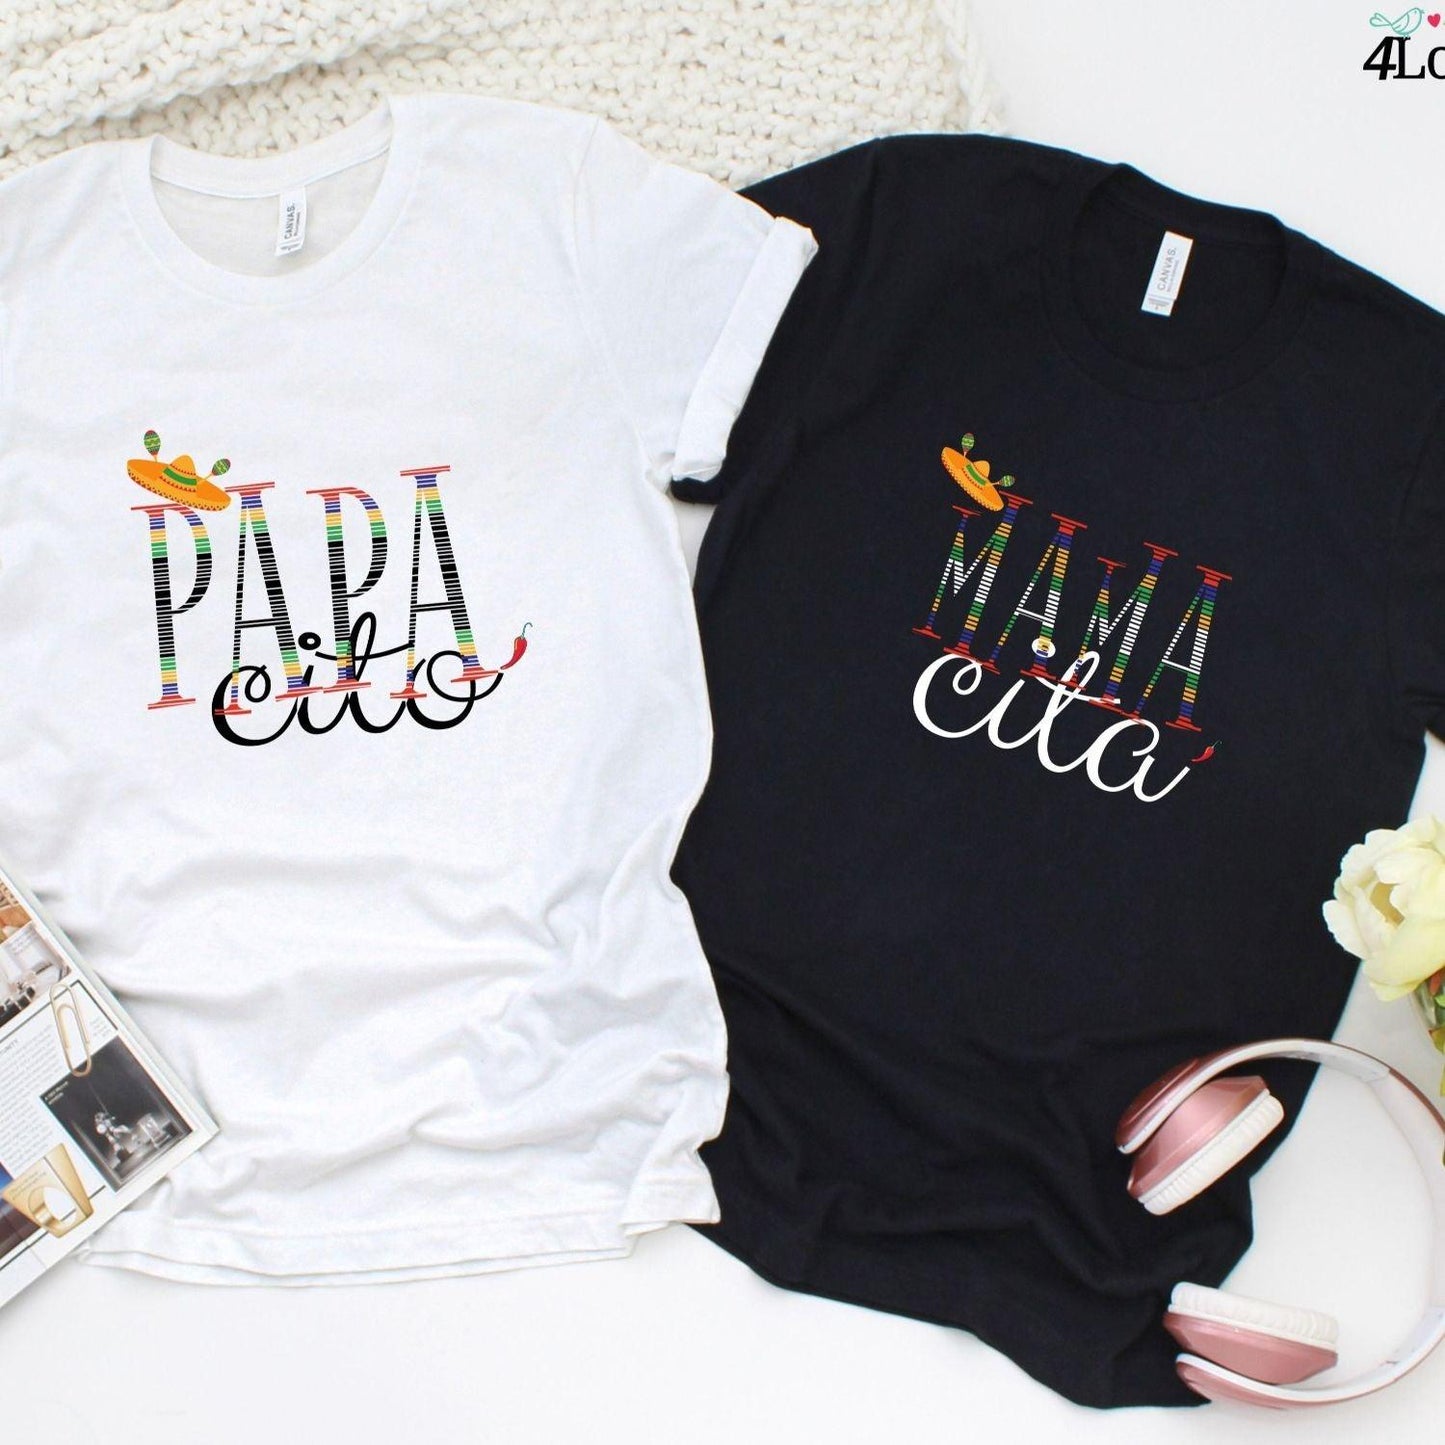 Matching Fiesta Outfits for Couples - Papacito & Mamacita Shirt Set - Cinco de Mayo - 4Lovebirds